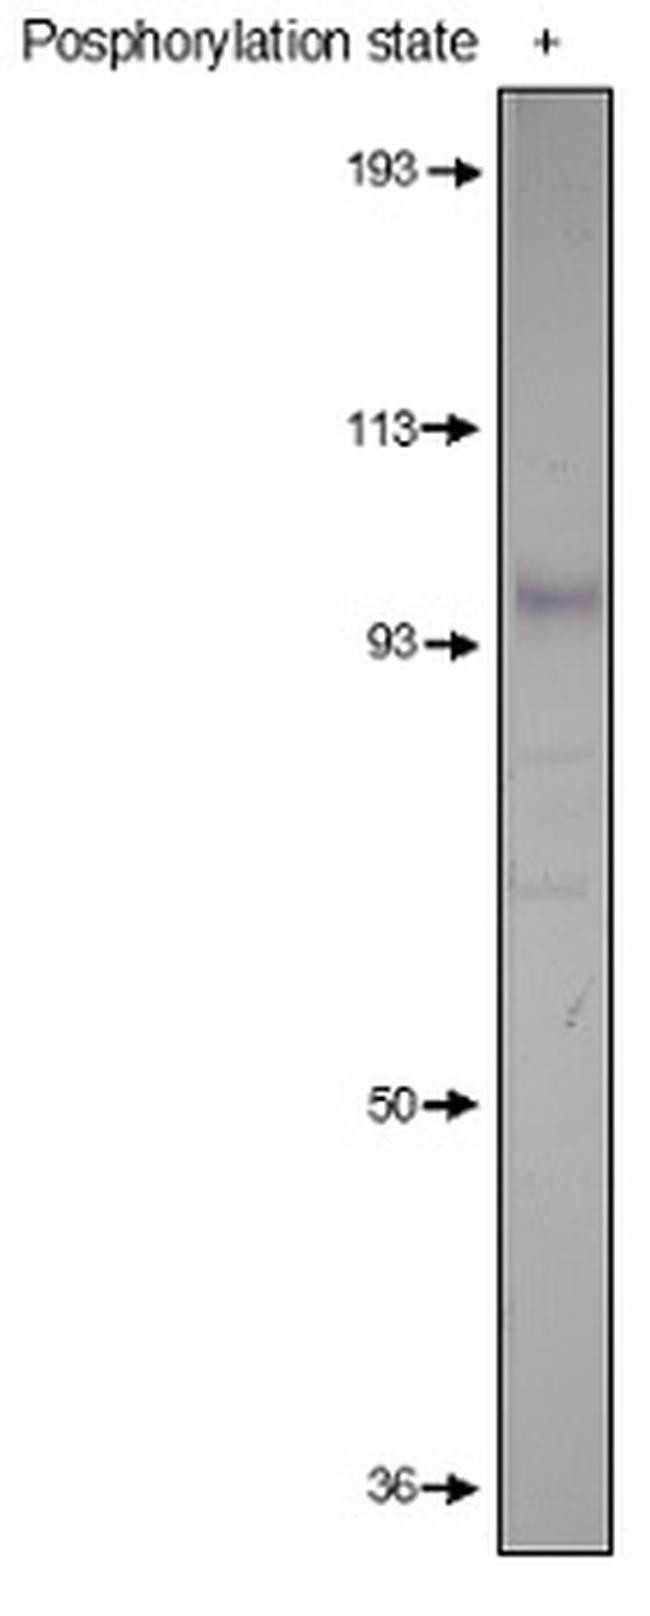 PDE4D Antibody in Western Blot (WB)